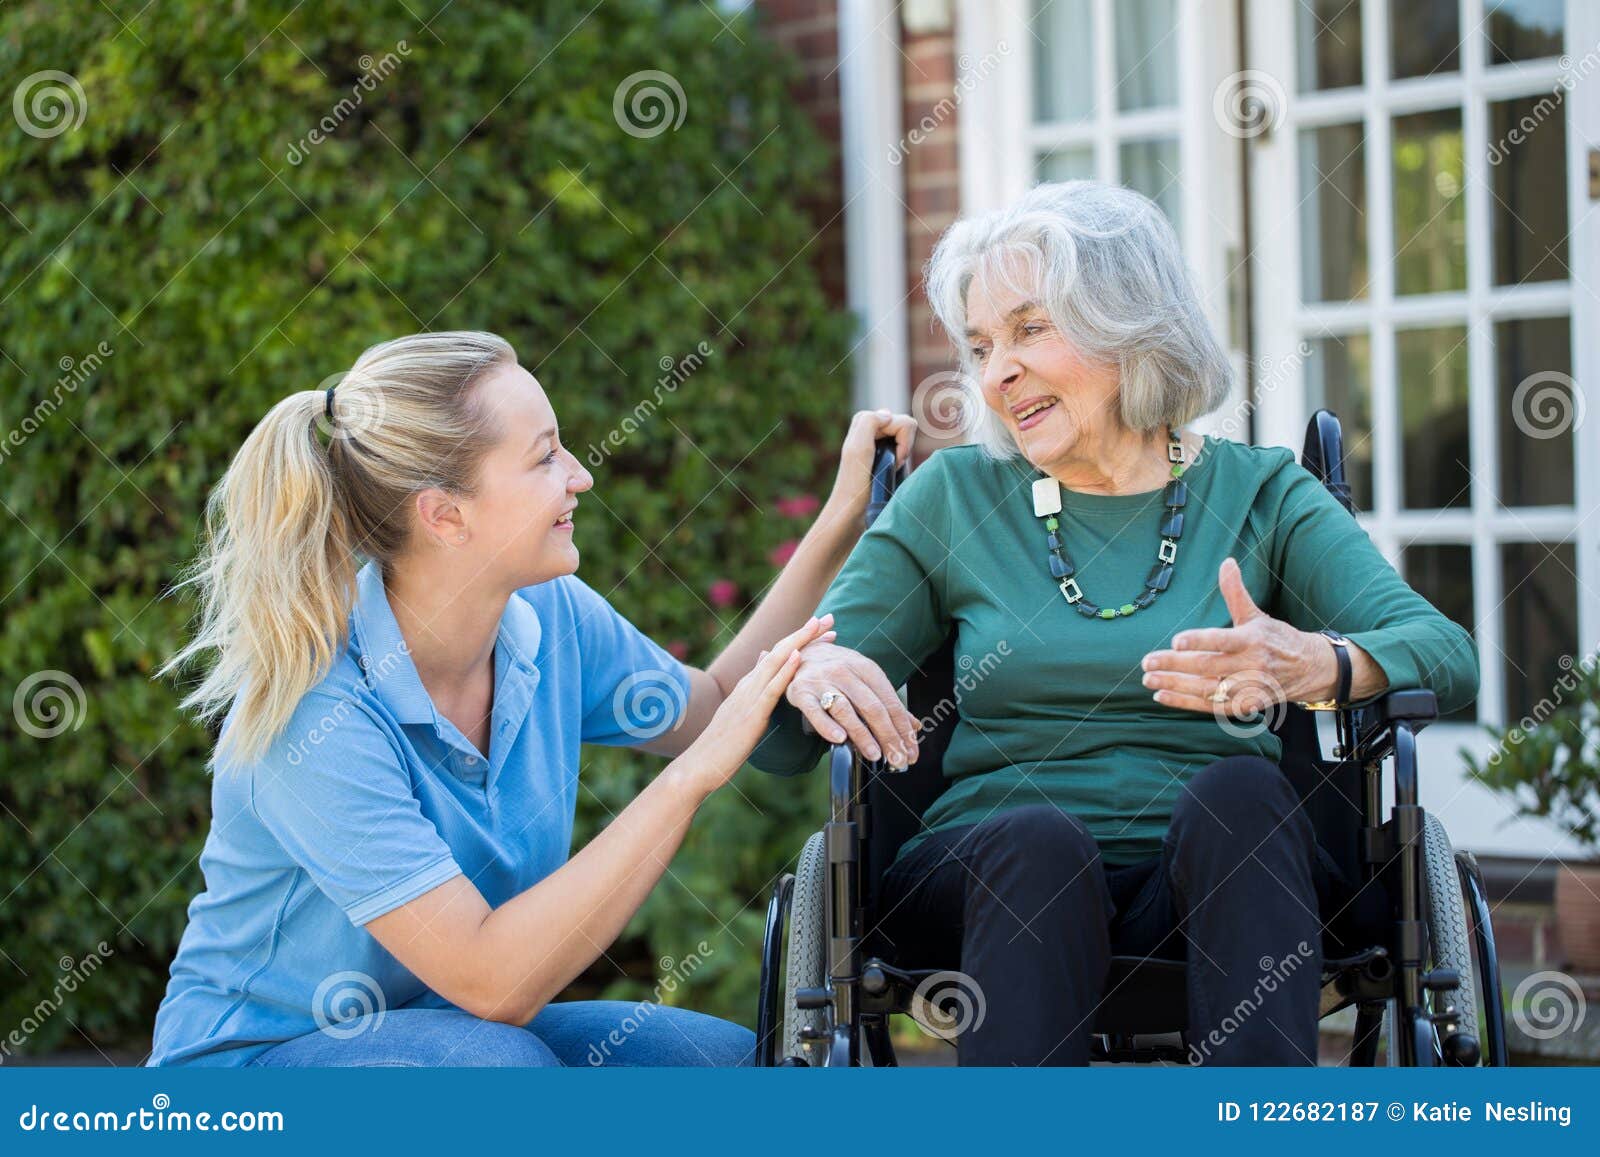 carer pushing senior woman in wheelchair outside home